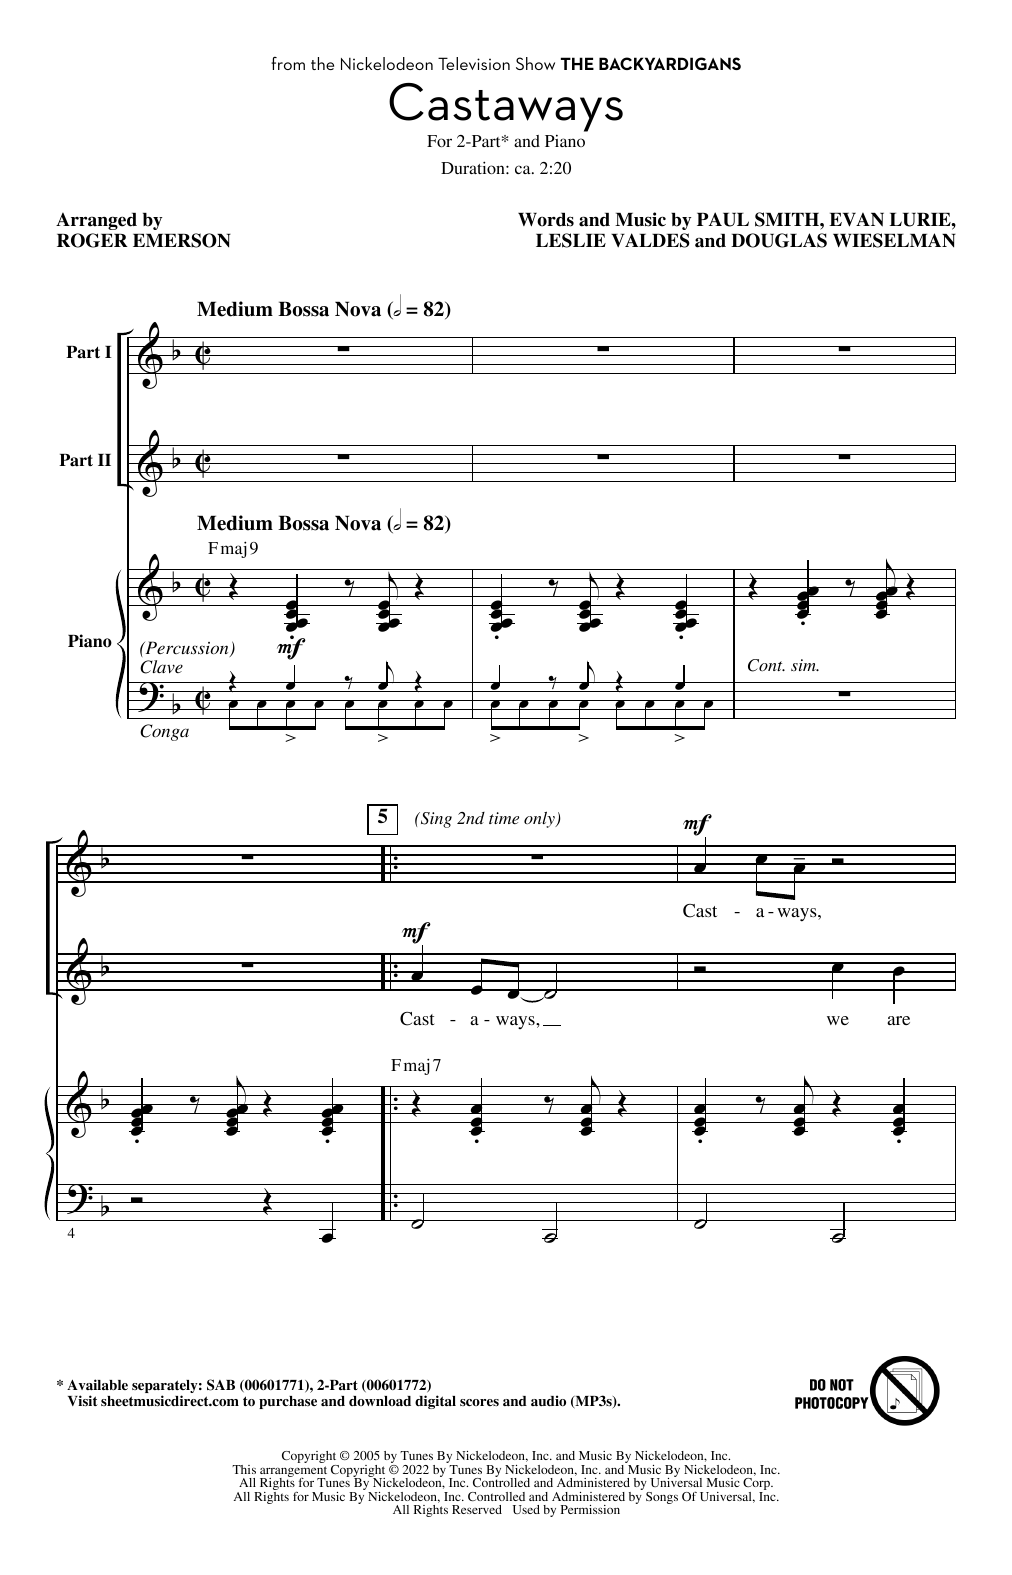 The Backyardigans Castaways (arr. Roger Emerson) Sheet Music Notes & Chords for SAB Choir - Download or Print PDF